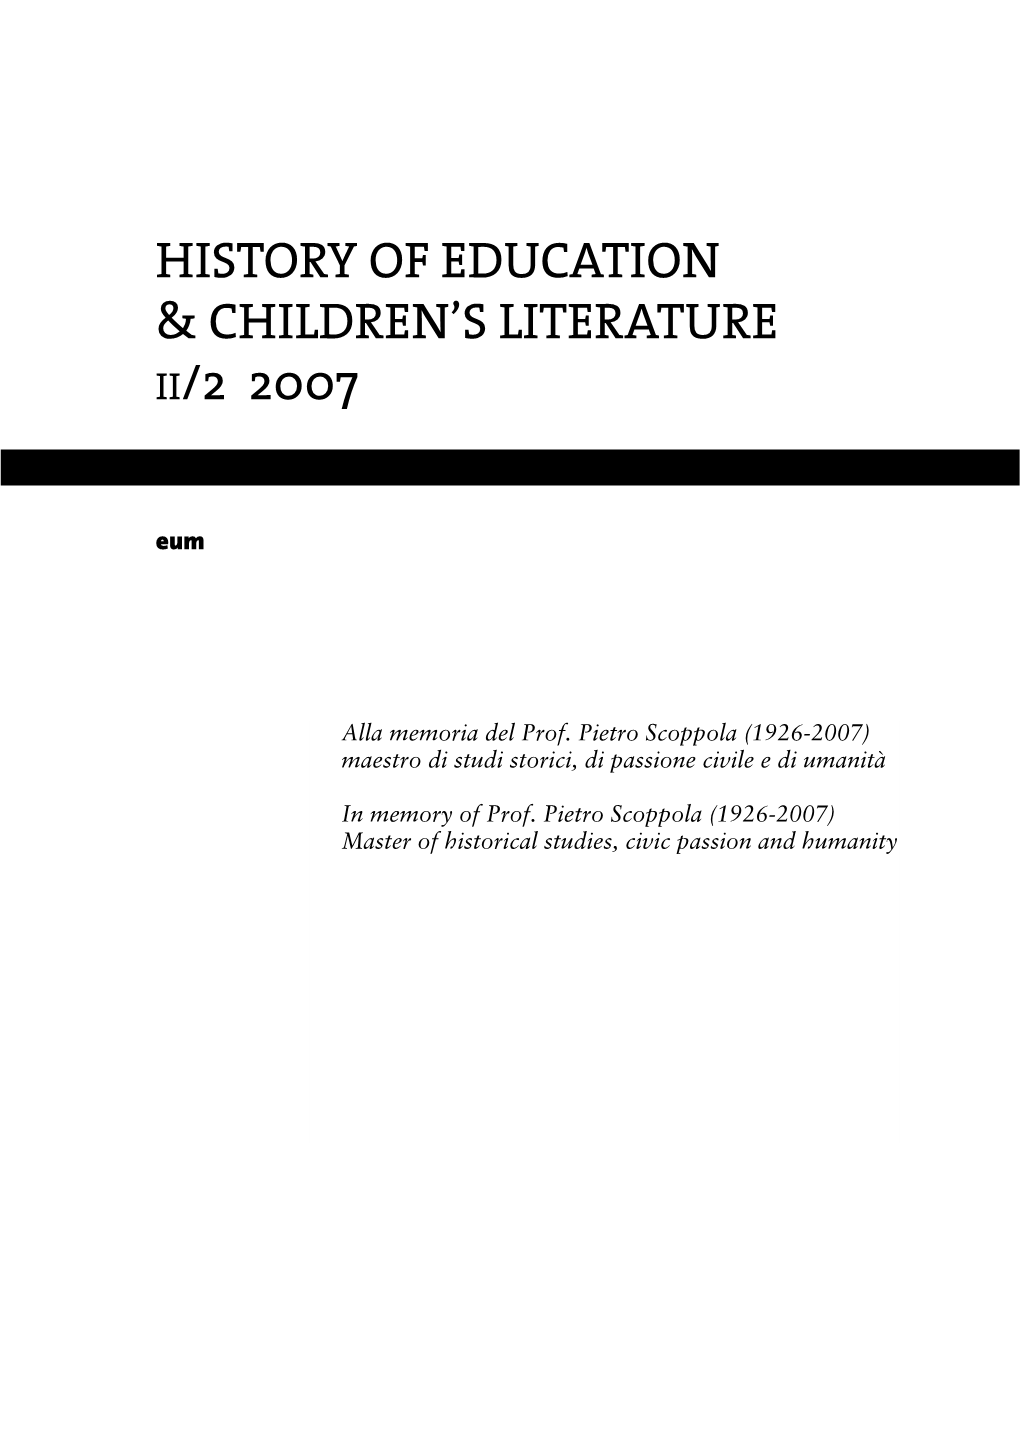 History of Education & Children's Literature